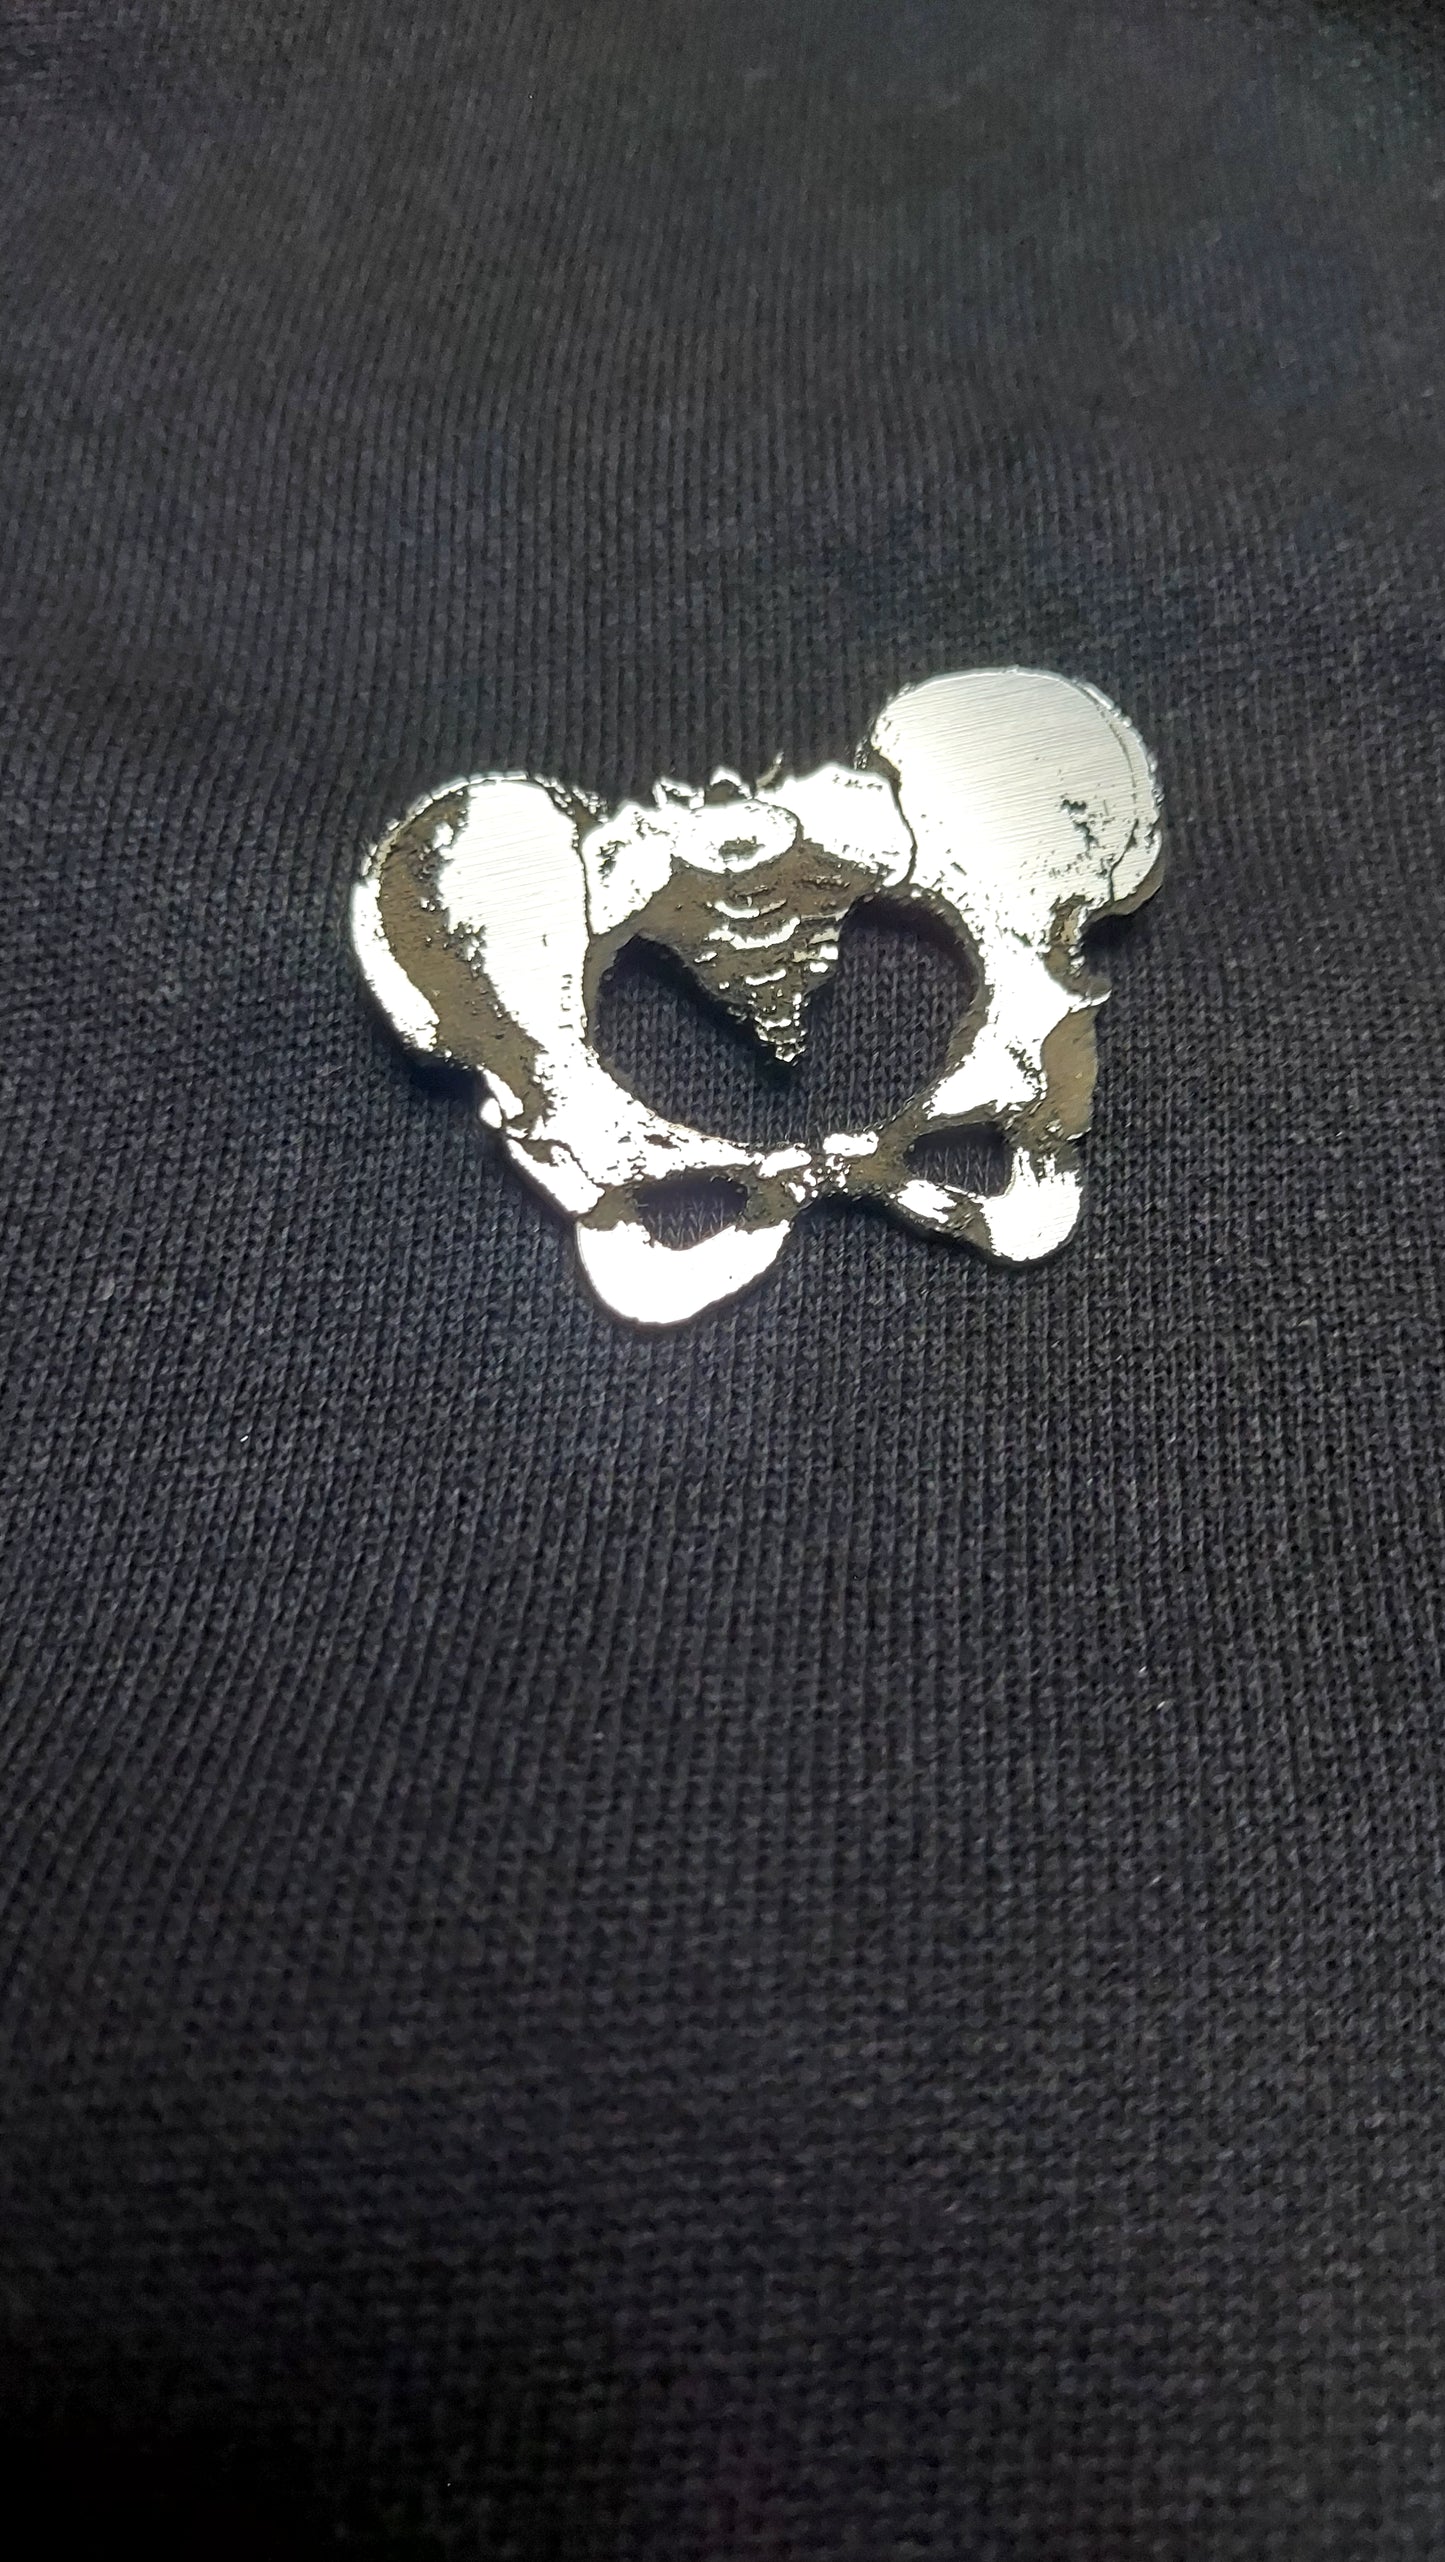 A silver pelvis brooch on black fabric